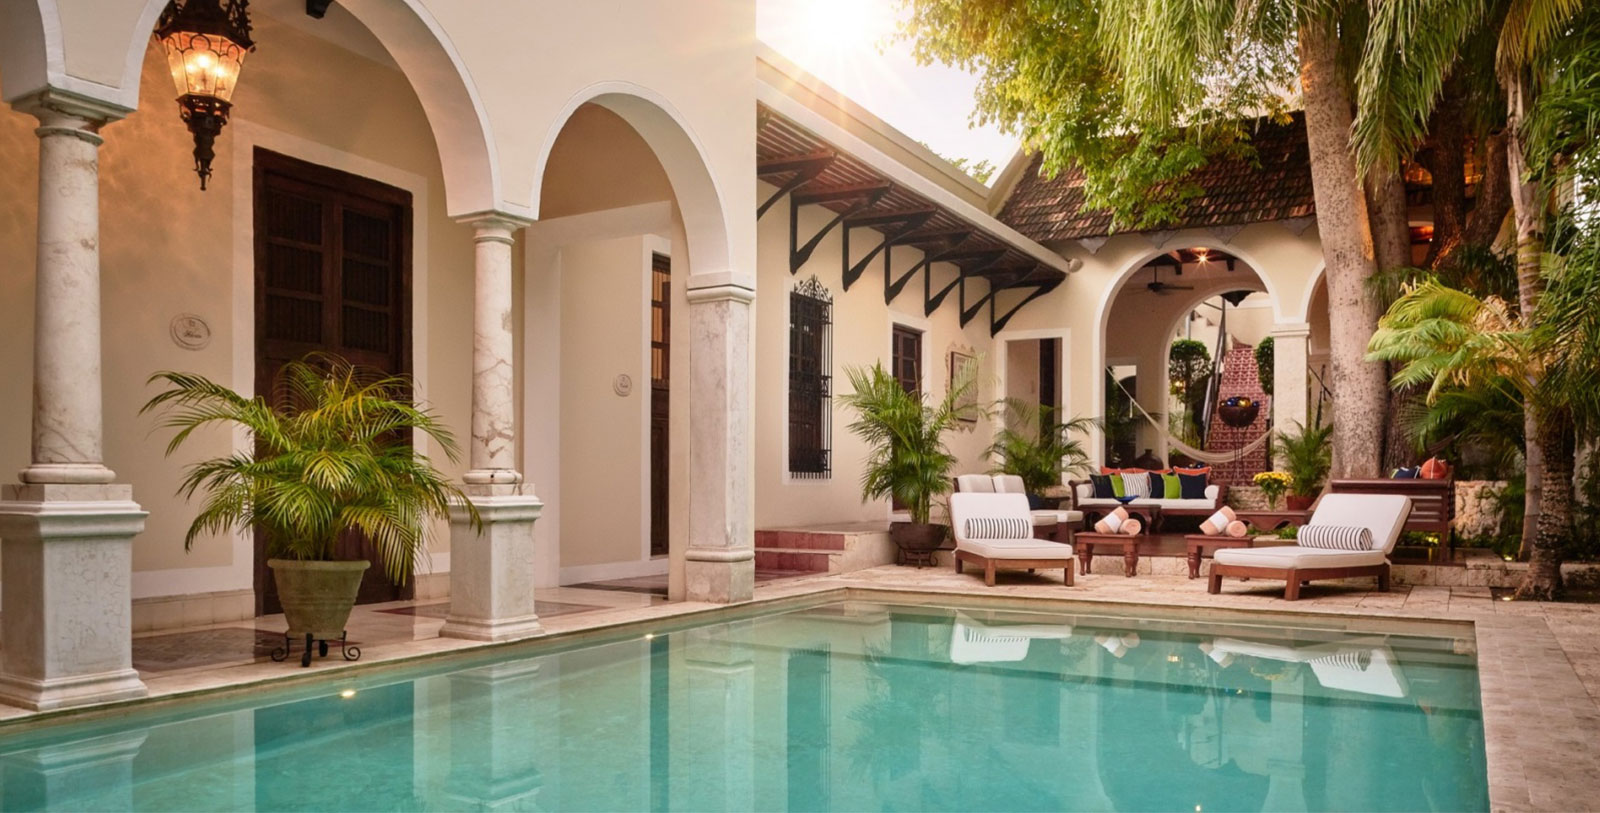 Image of outdoor pool Casa Lecanda, 1900s, Member of Historic Hotels Worldwide, in Merida, Mexico, Explore